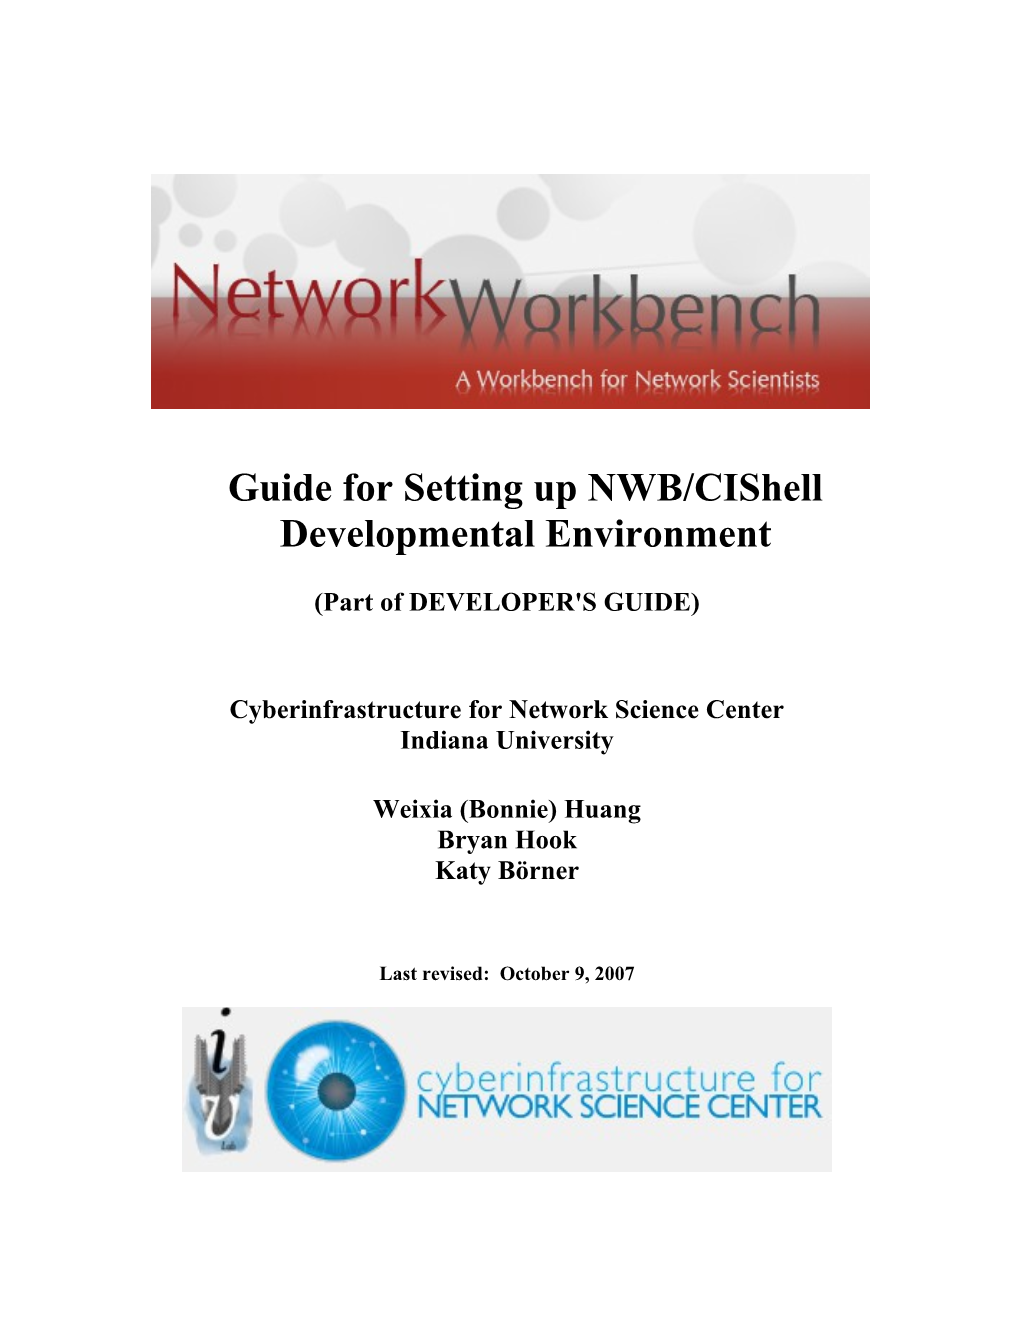 Guide for Setting up NWB/Cishell Developmental Environment